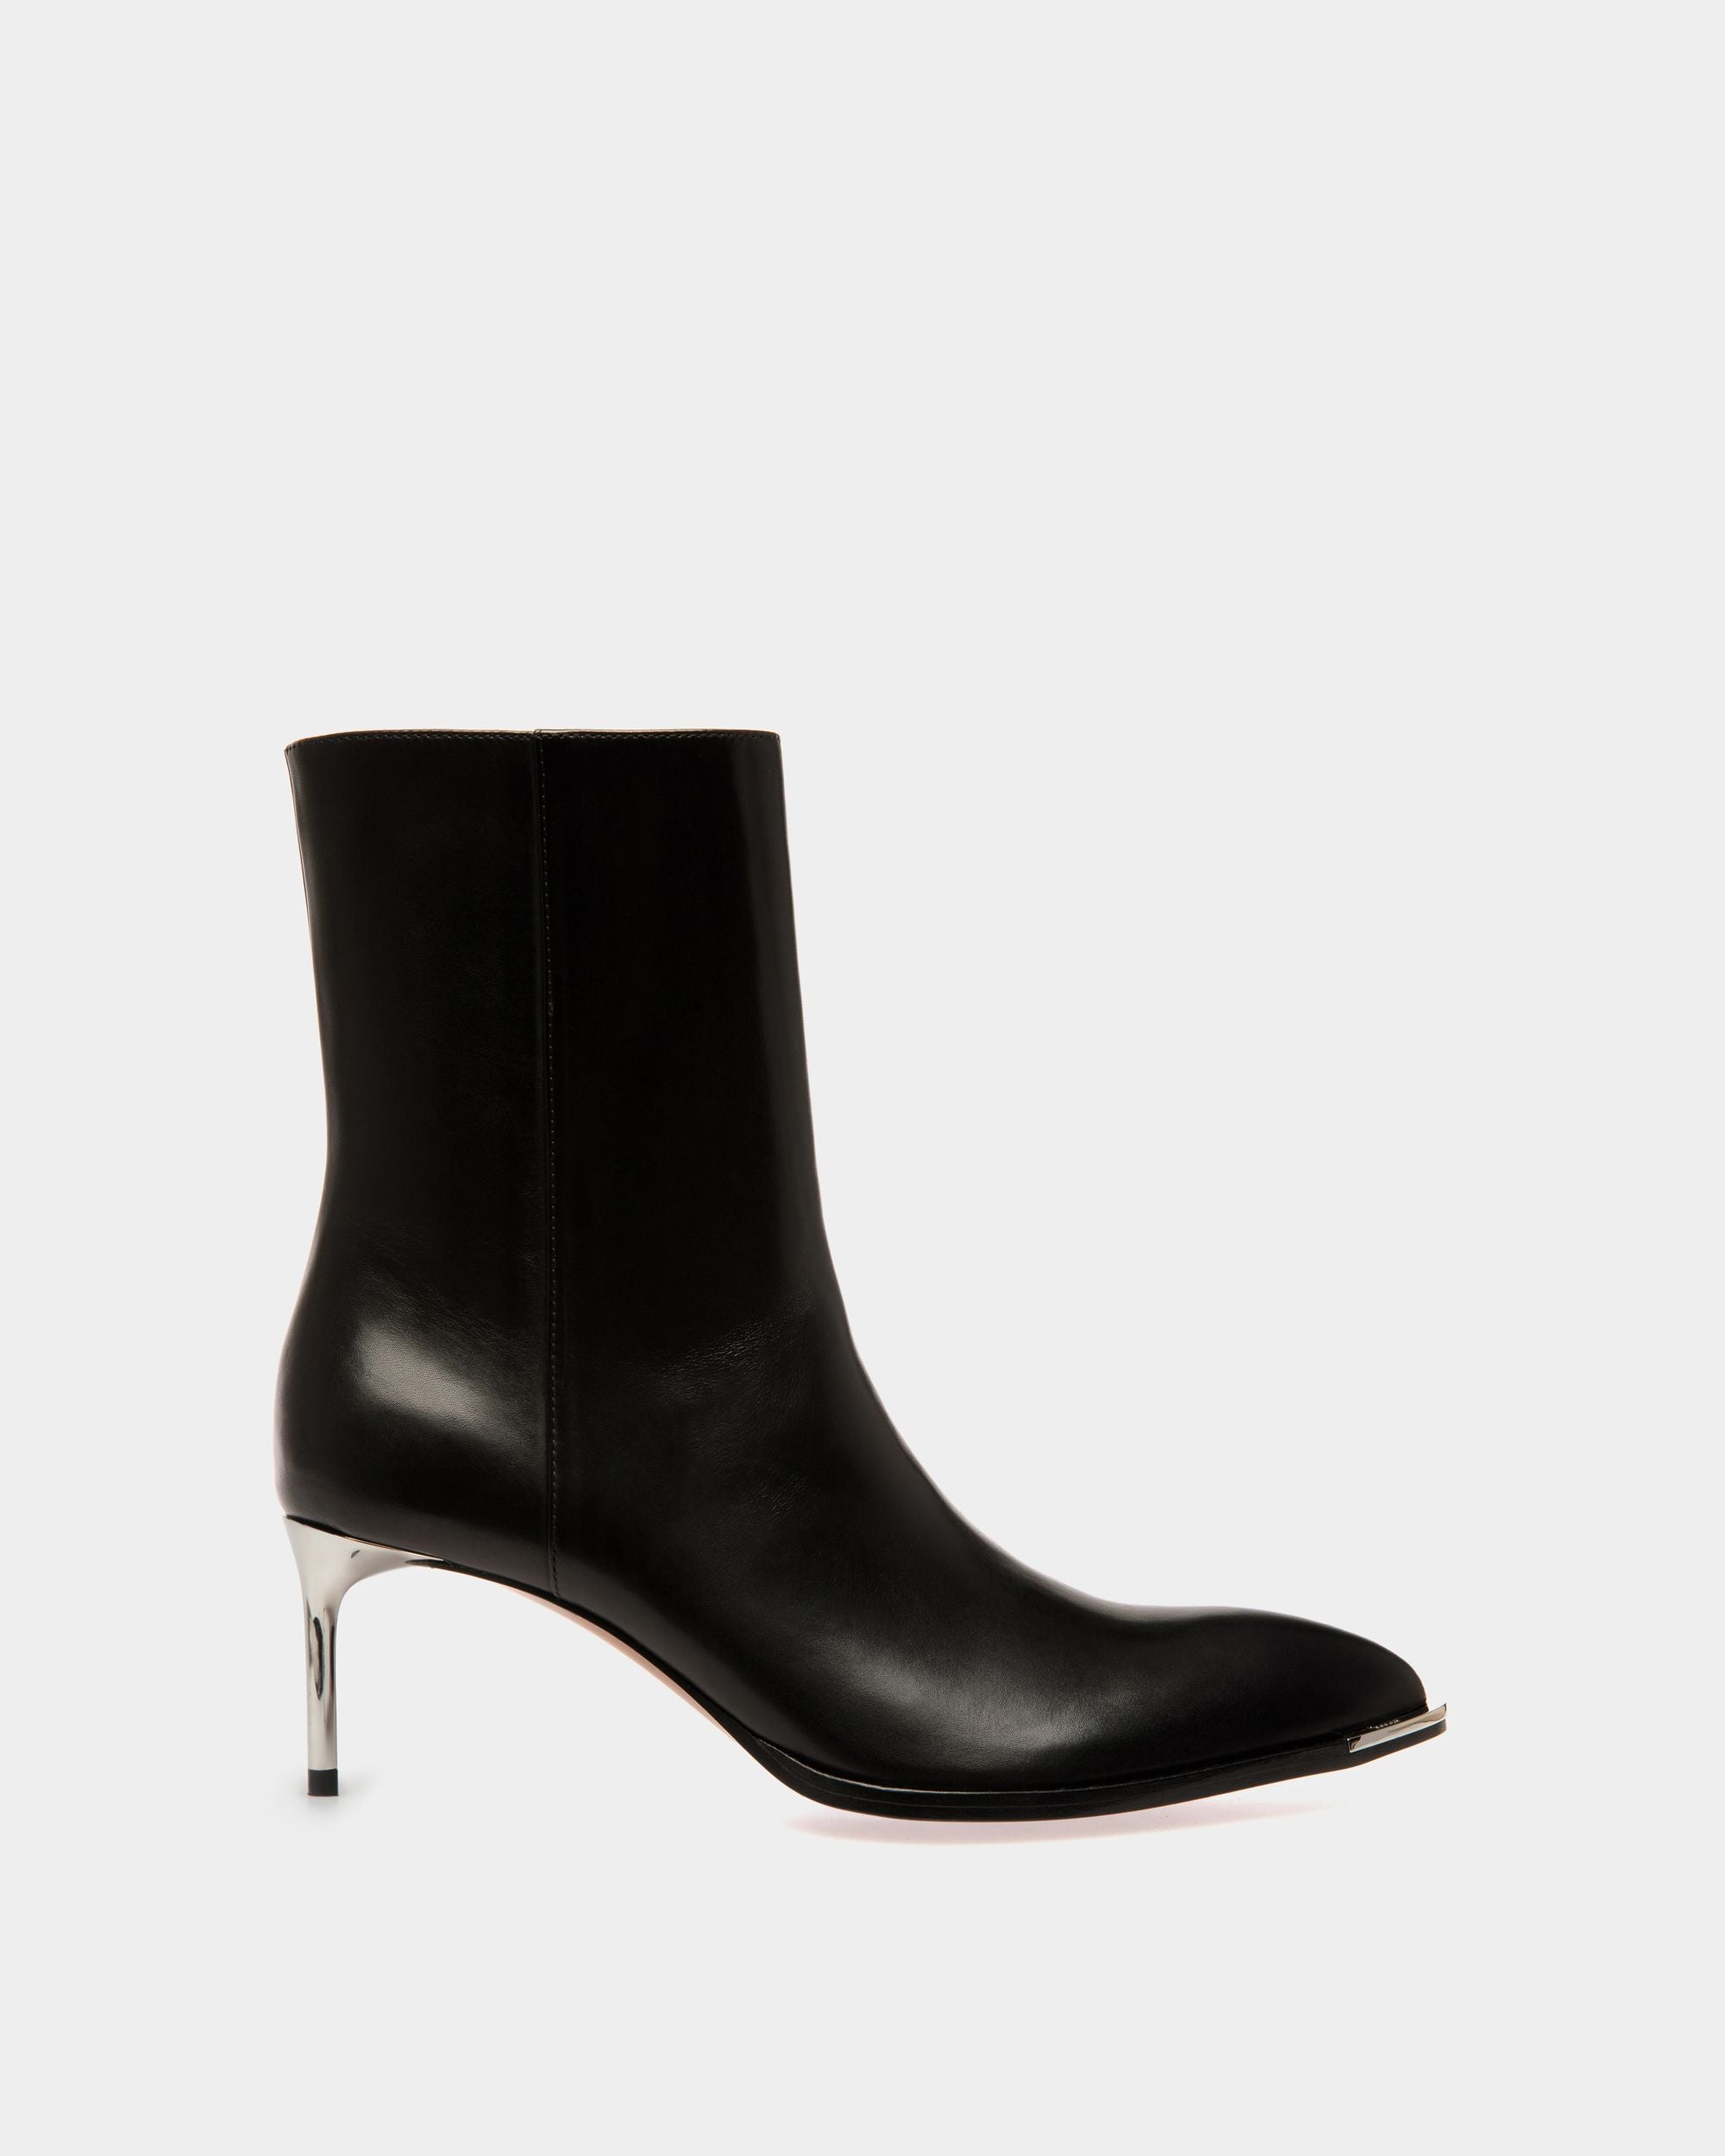 Hannika | Women's Boots |Black Leather | Bally | Still Life Side